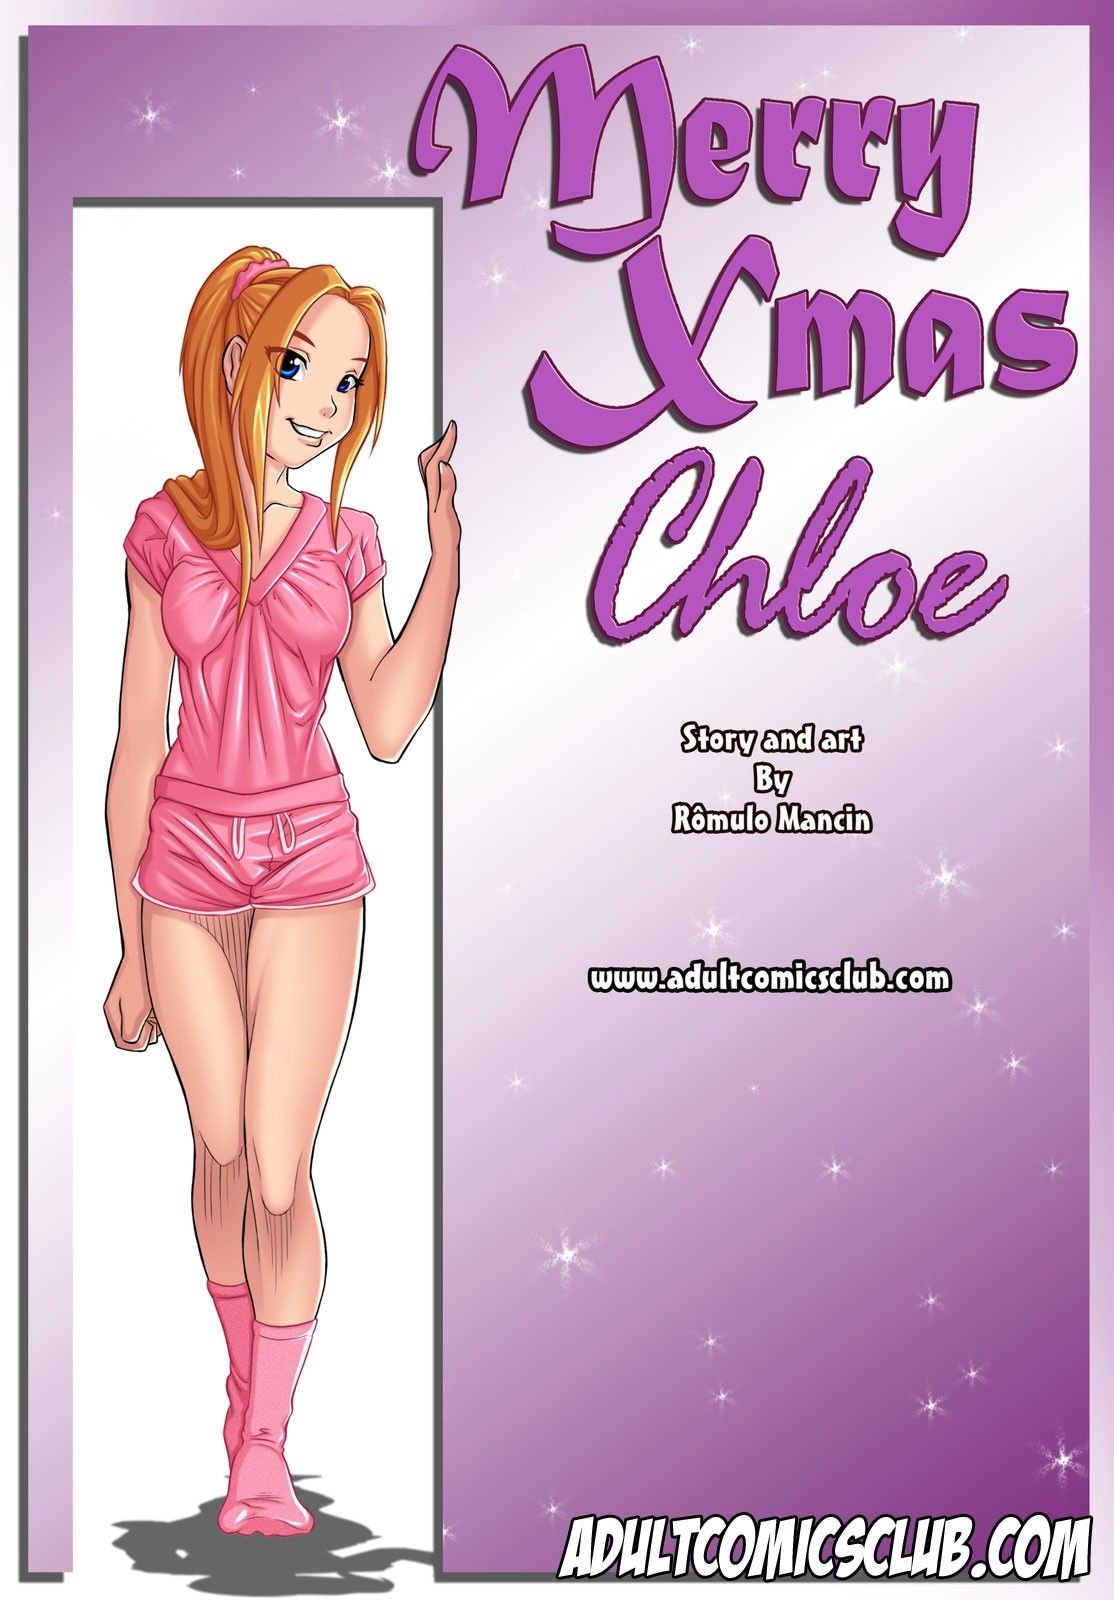 melkor (romulo mancin) vrolijk Kerstmis Chloe